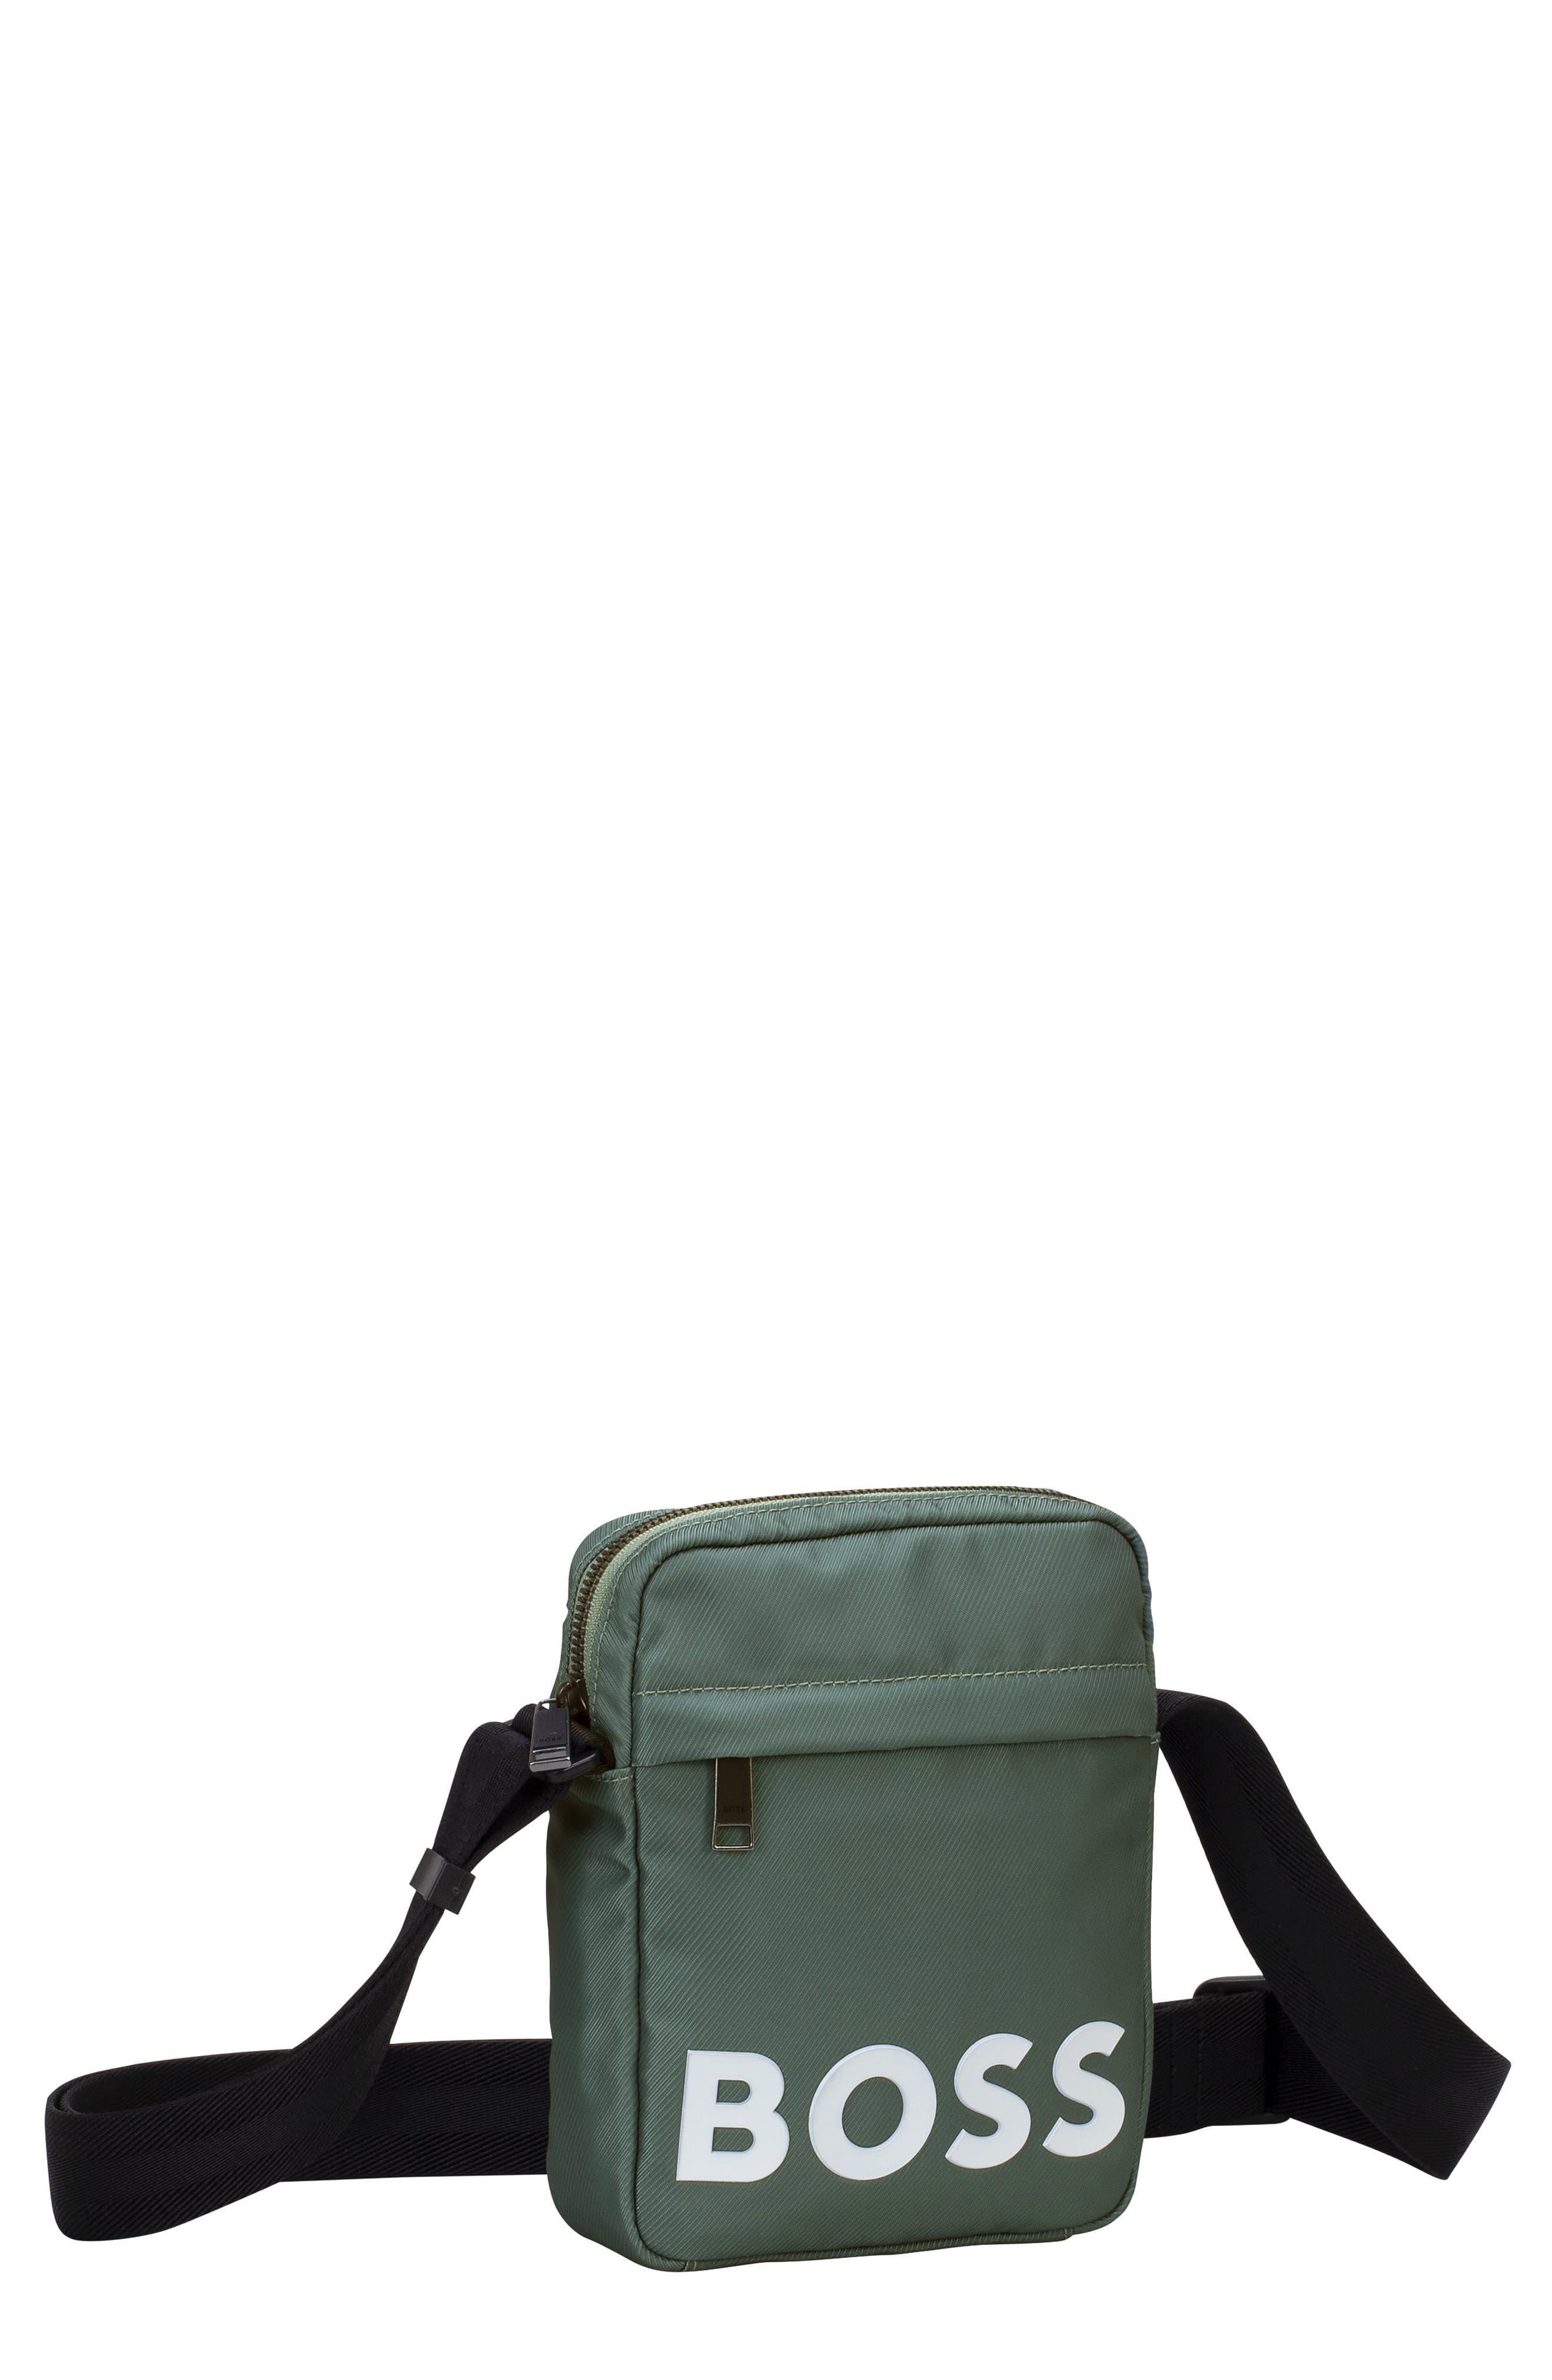 BOSS by HUGO BOSS Catch 2.0 Compact Messenger Bag in Green for Men | Lyst